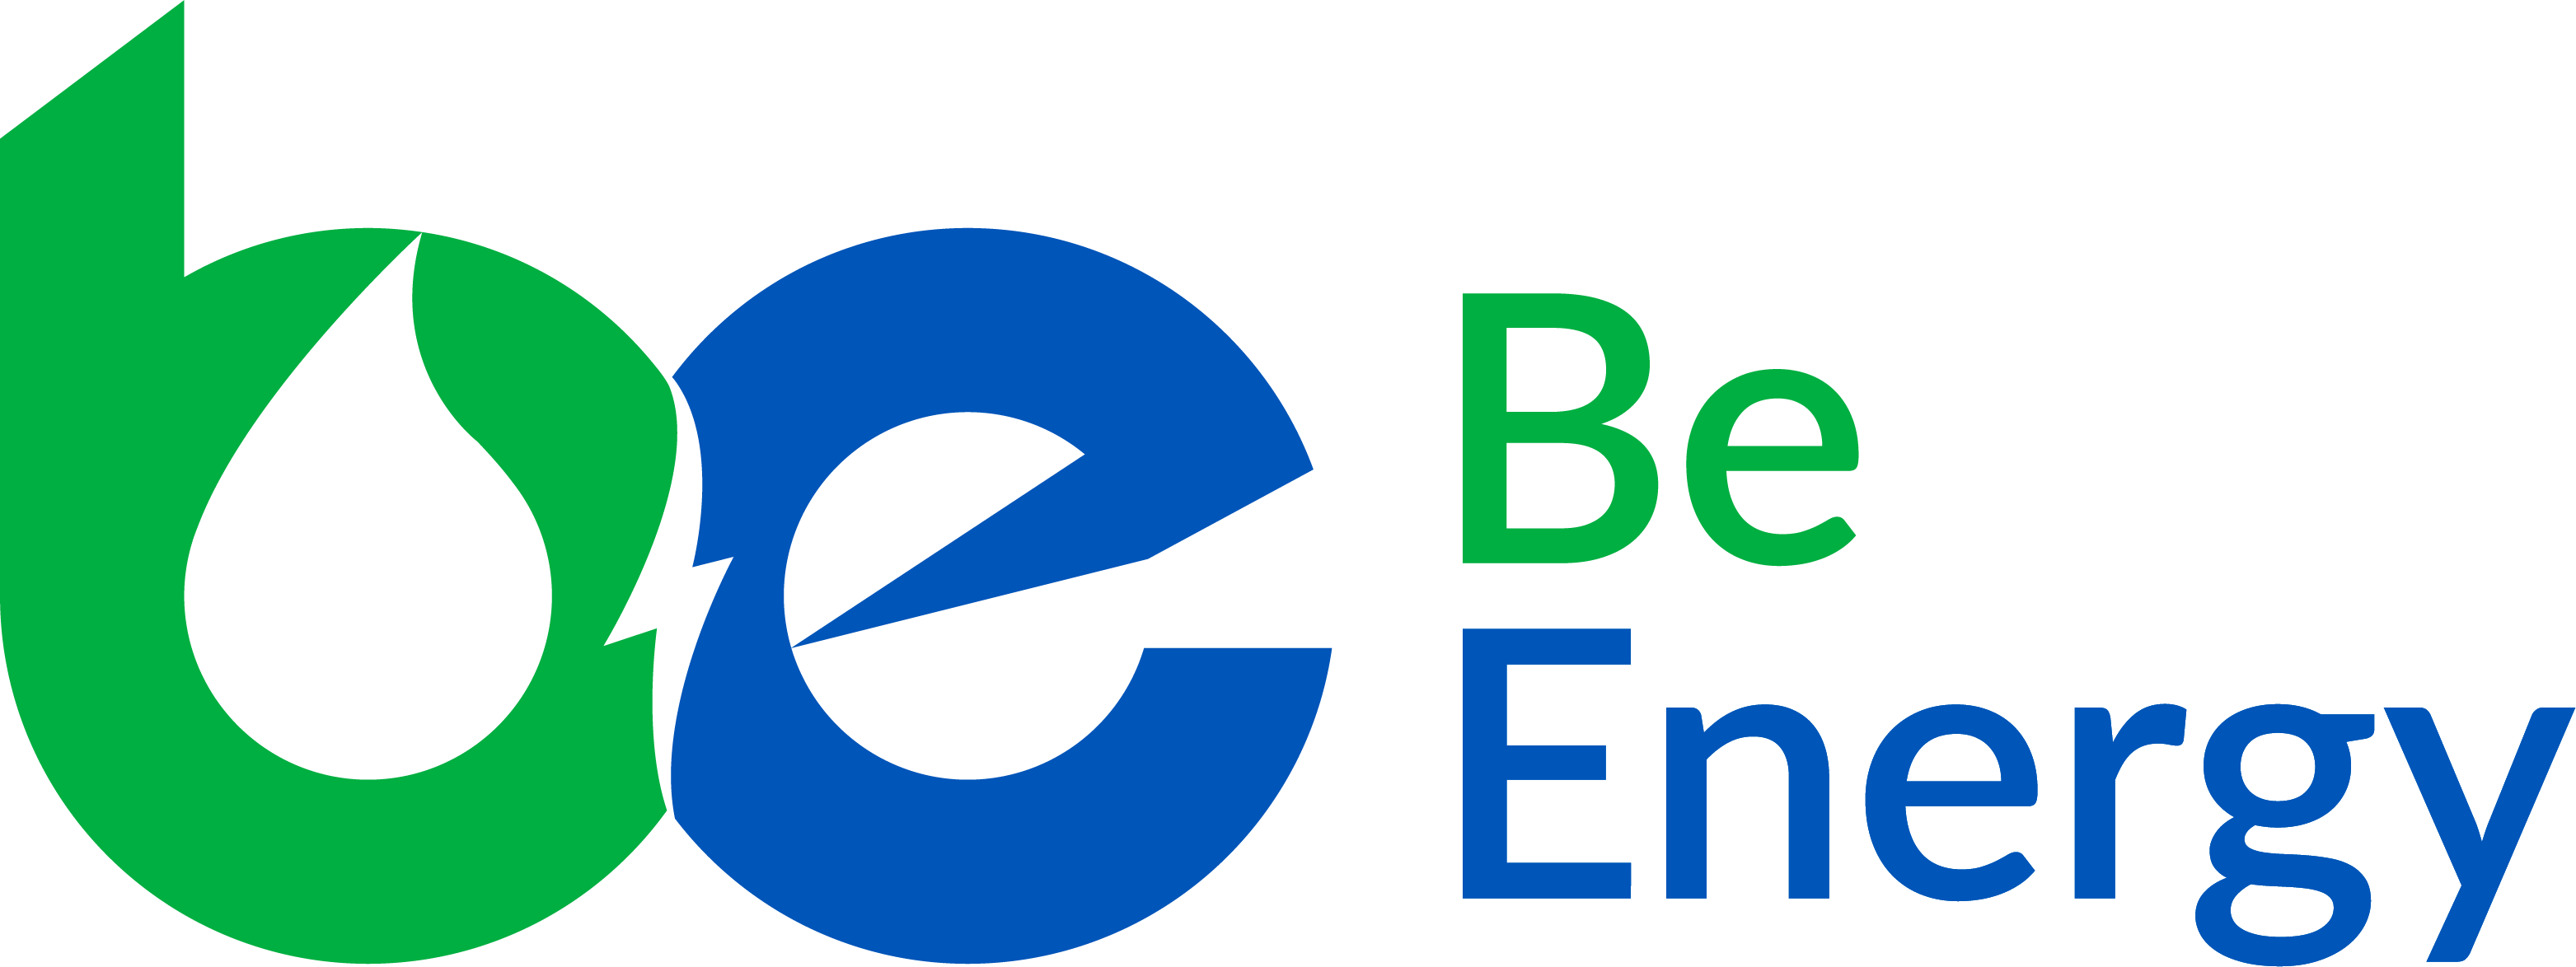 be-logo2